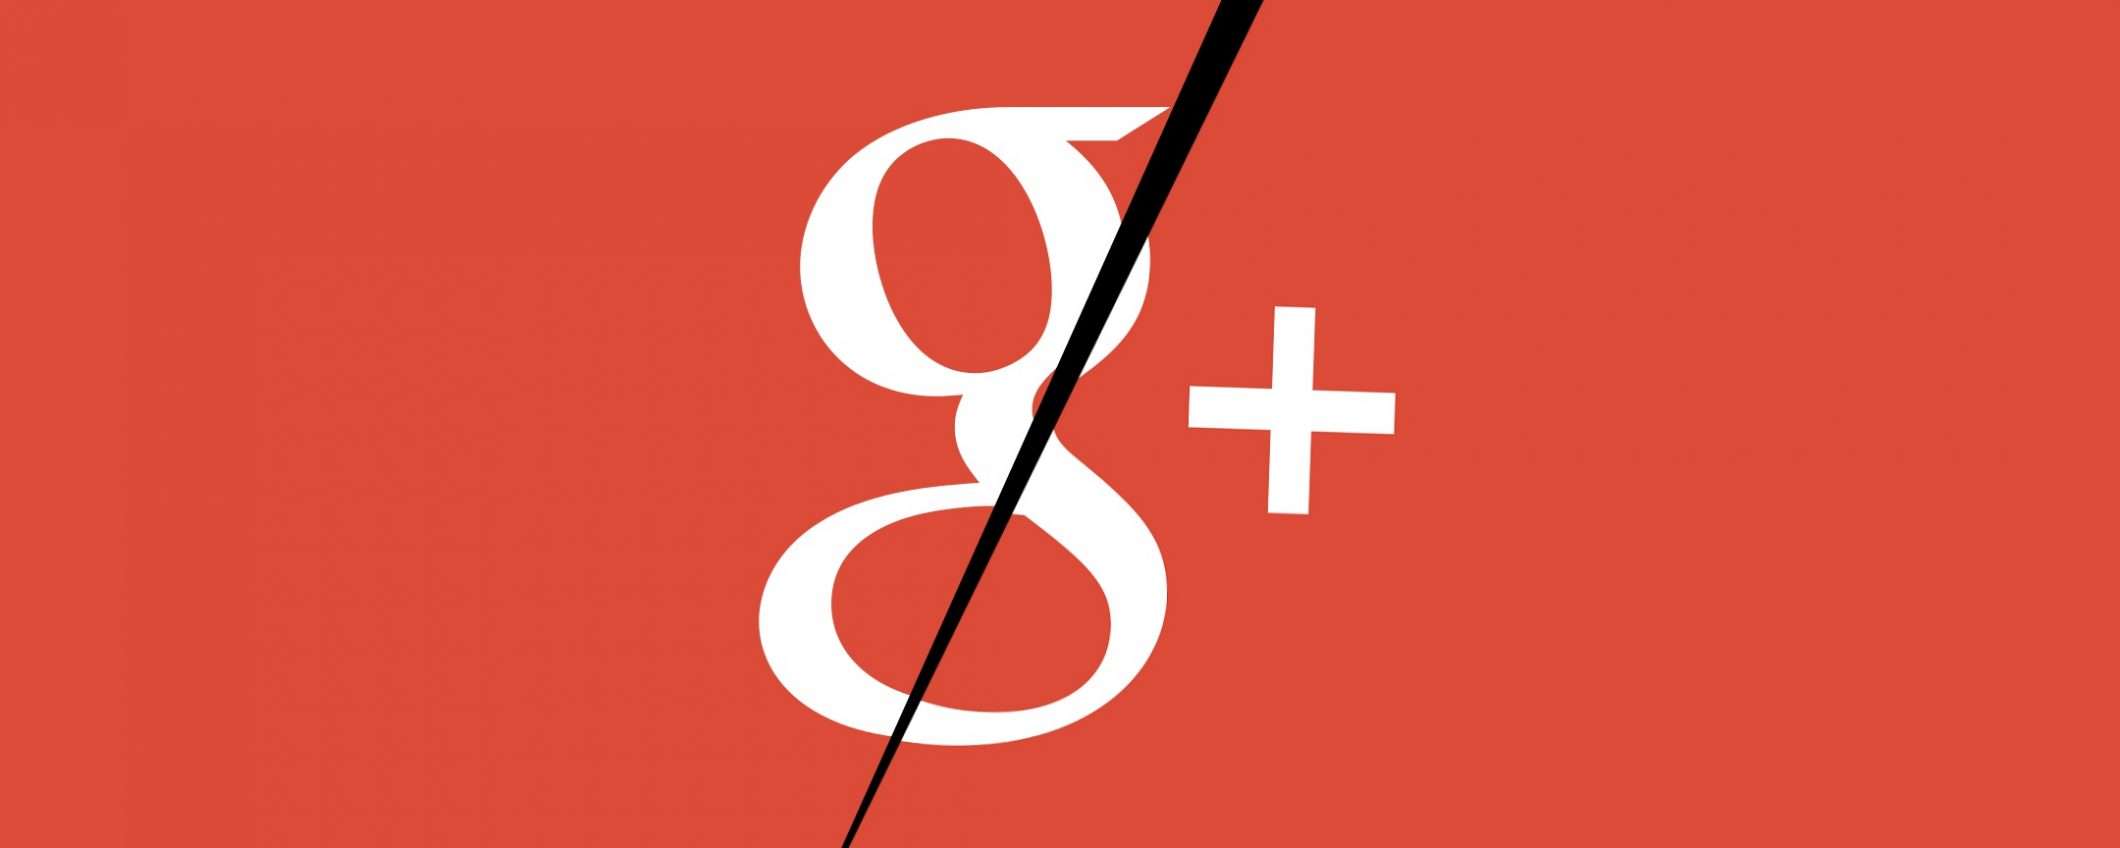 Google+ vulnerabile da anni, ma Google ha taciuto